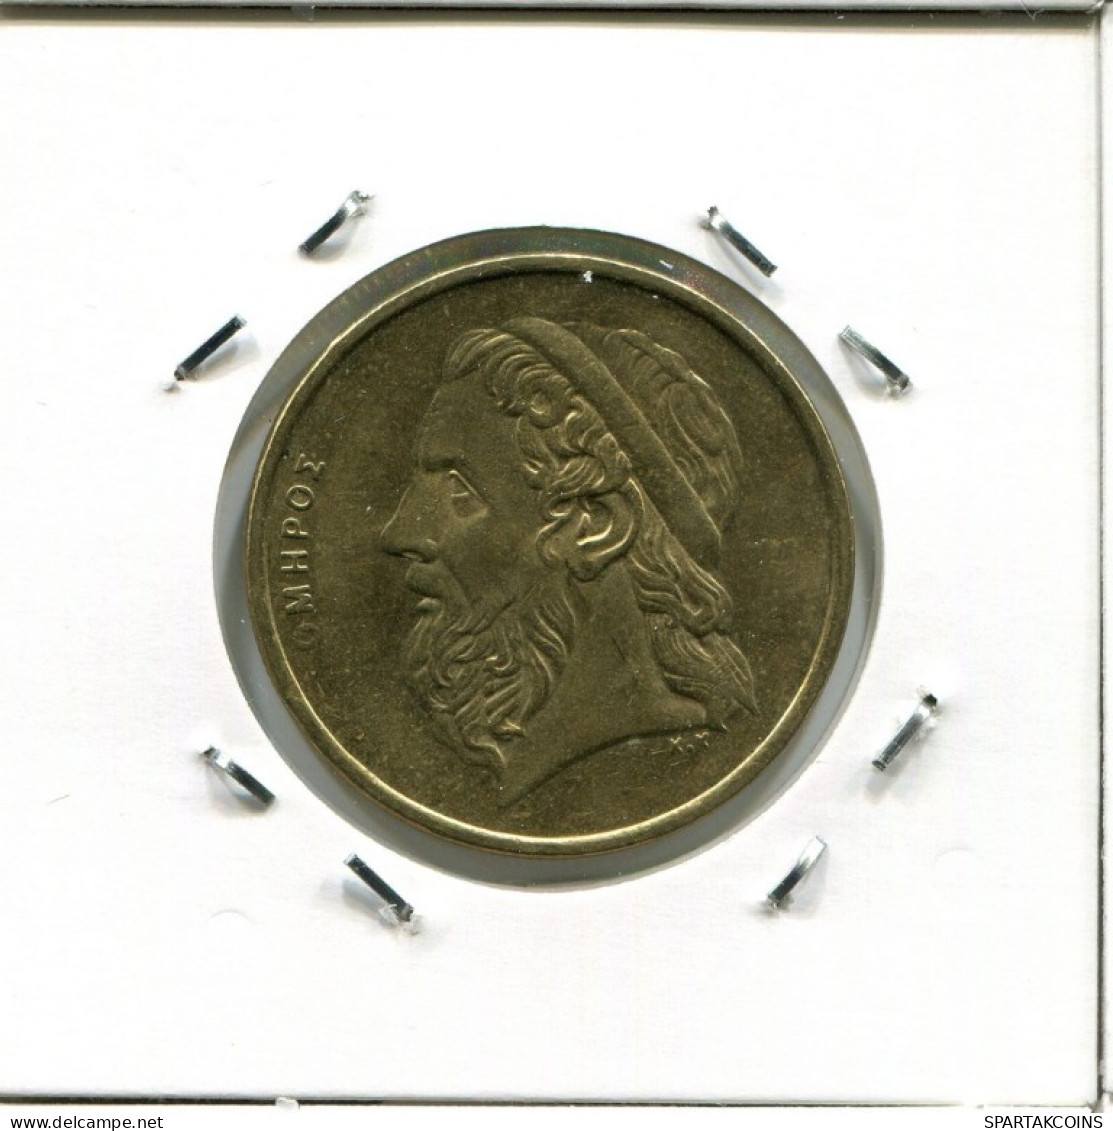 50 DRACHMES 2000 GREECE Coin #AK461.U.A - Griekenland